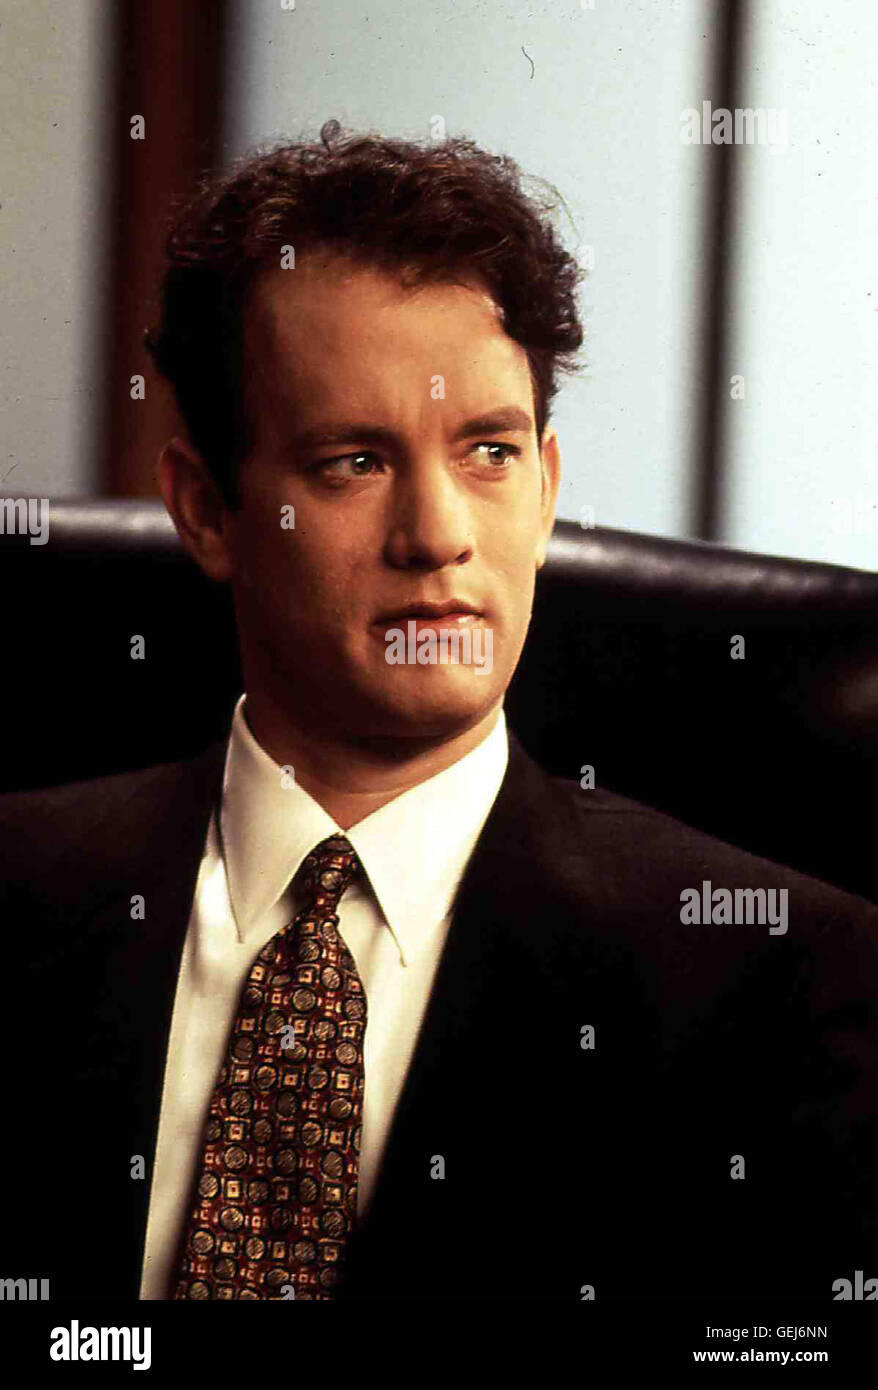 TOM HANKS 1993   Von heute auf morgen wird Andrew (Tom Hanks) entlassen. *** Local Caption *** 1993, Philadelphia, Philadelphia Stock Photo